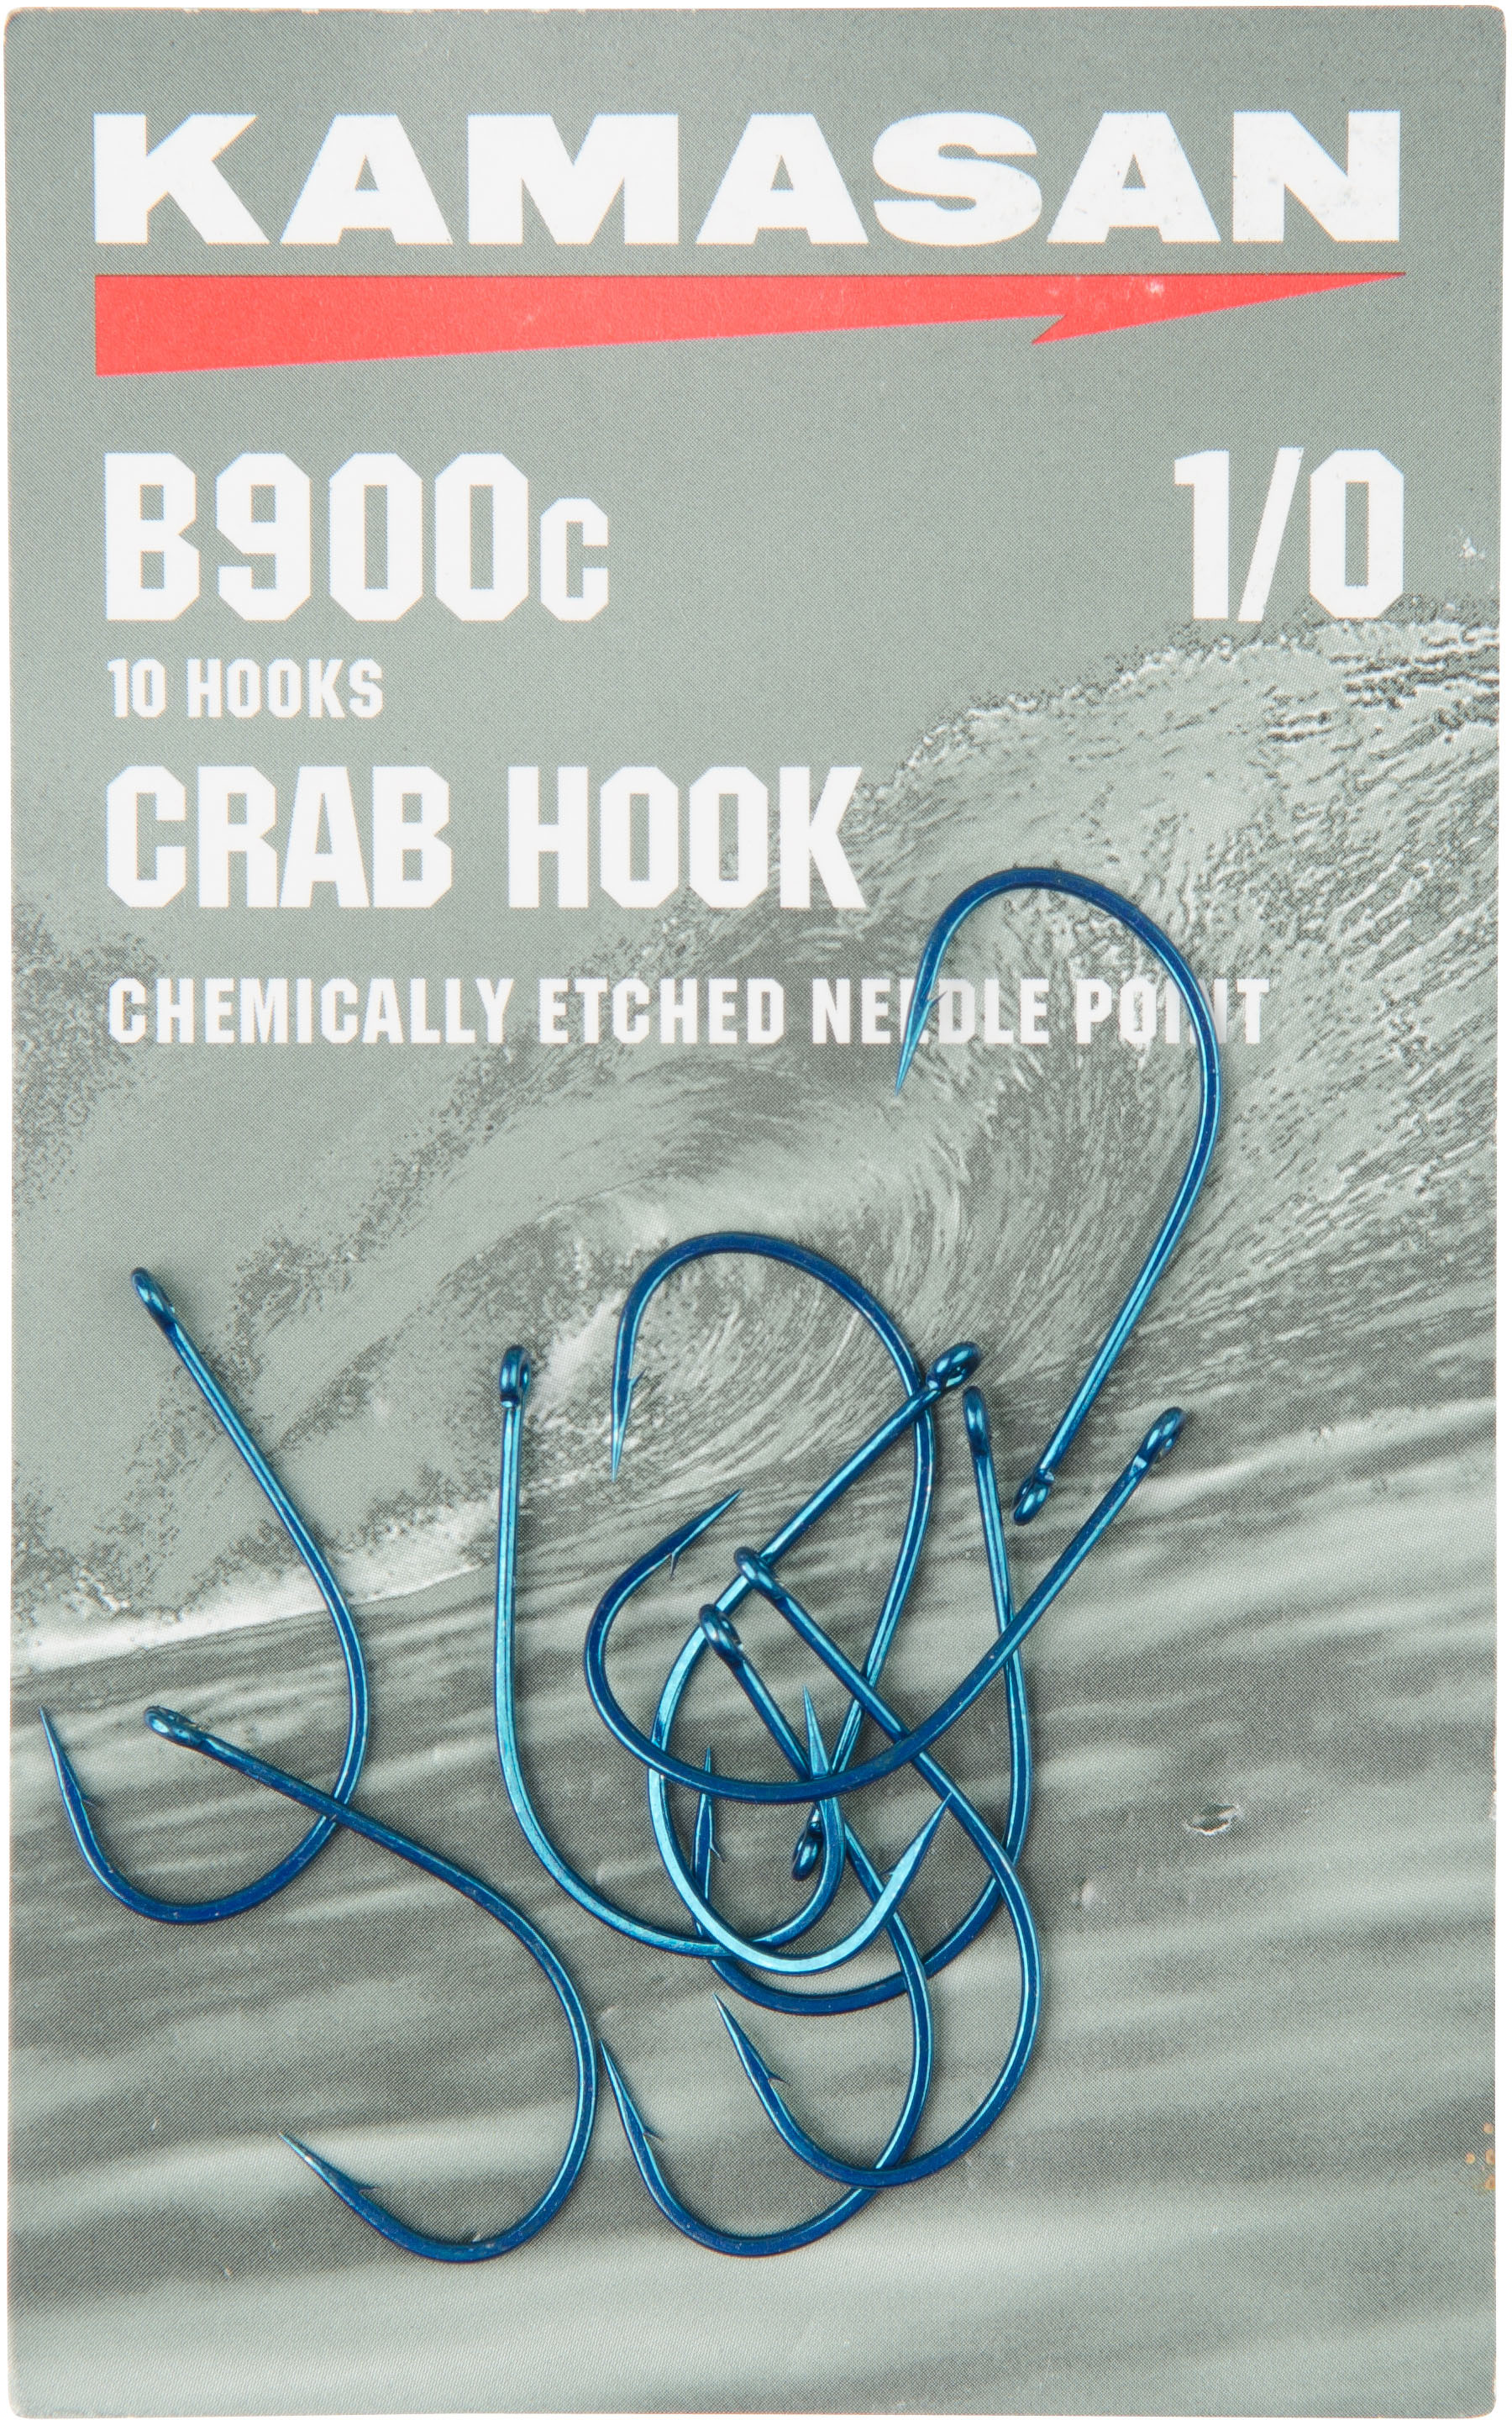 Kamasan B900c Crab Sea Hooks - Poingdestres